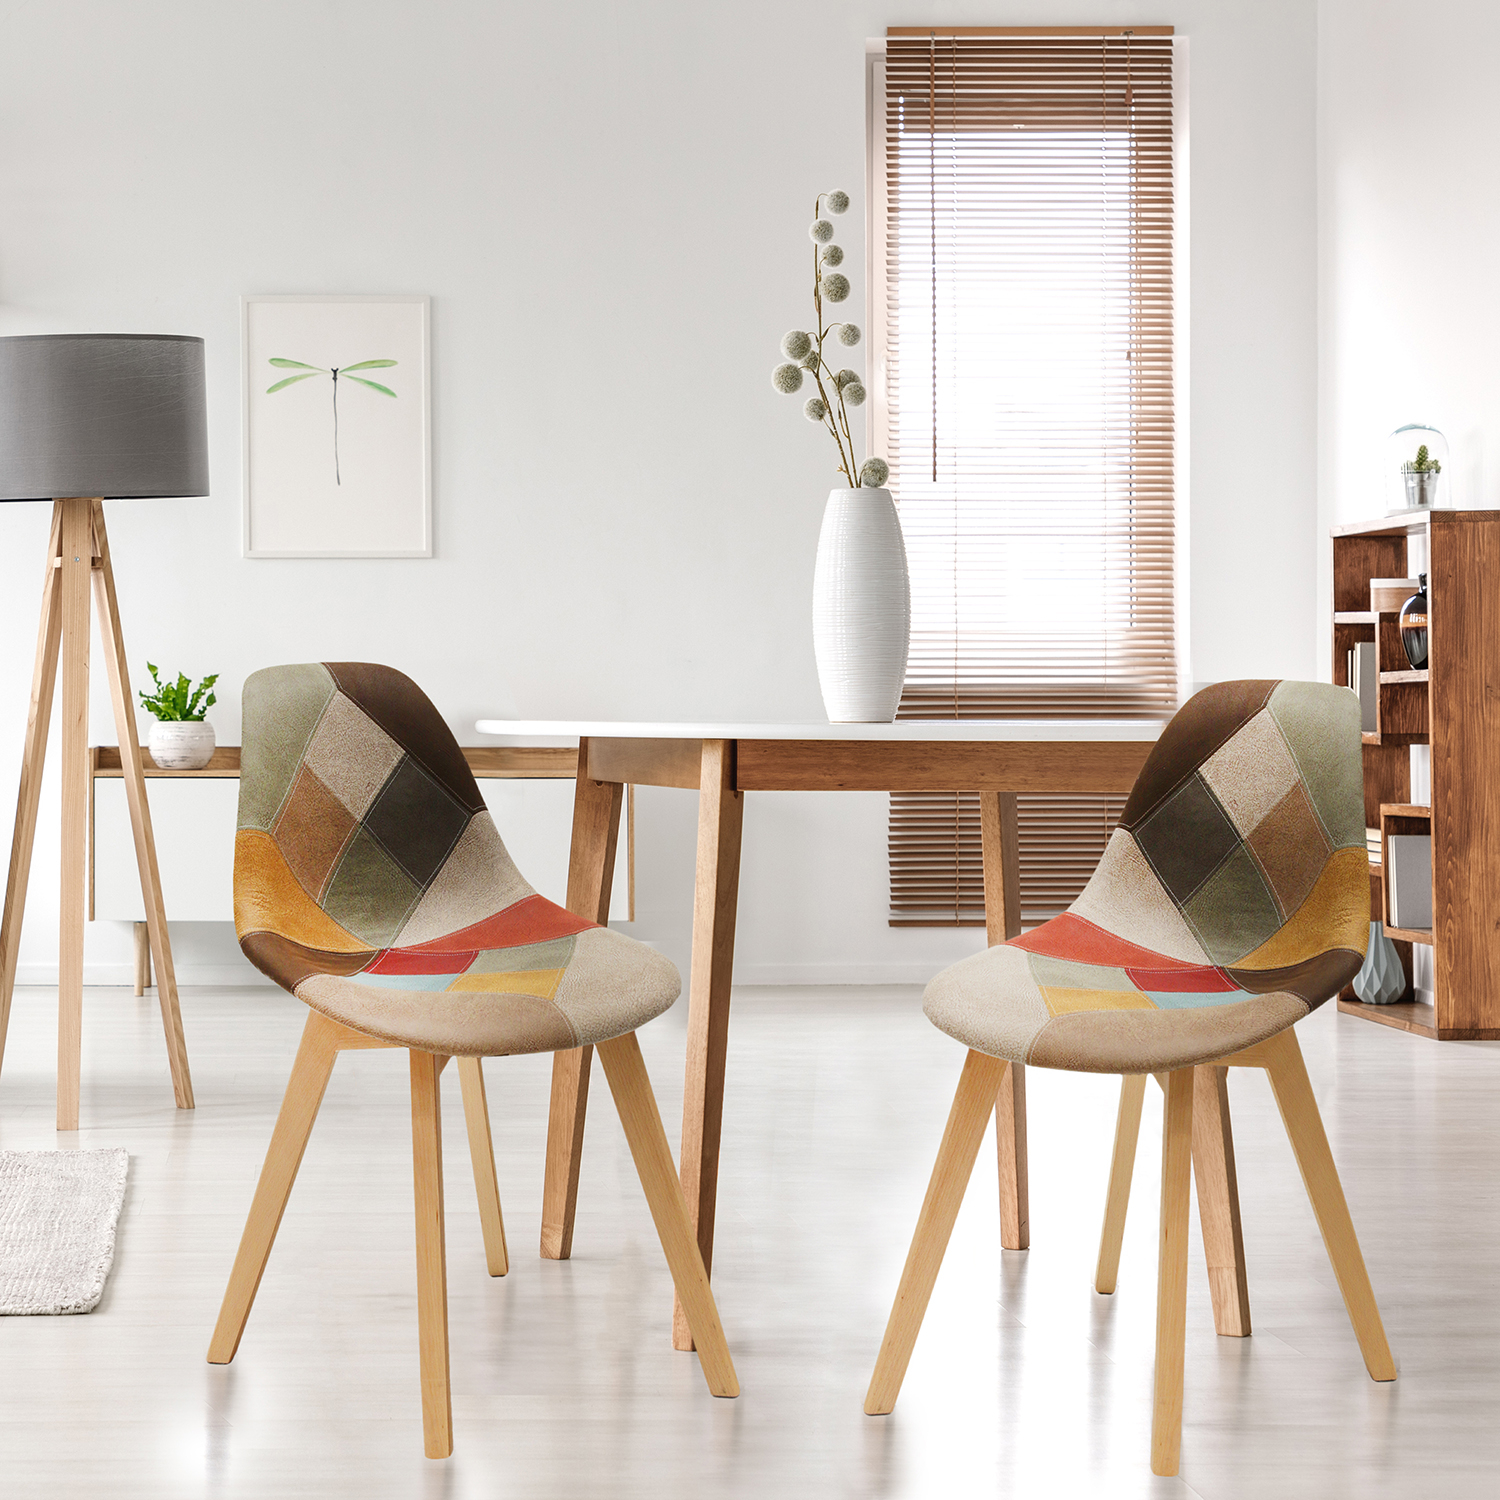 2 chaises design scandinave marron